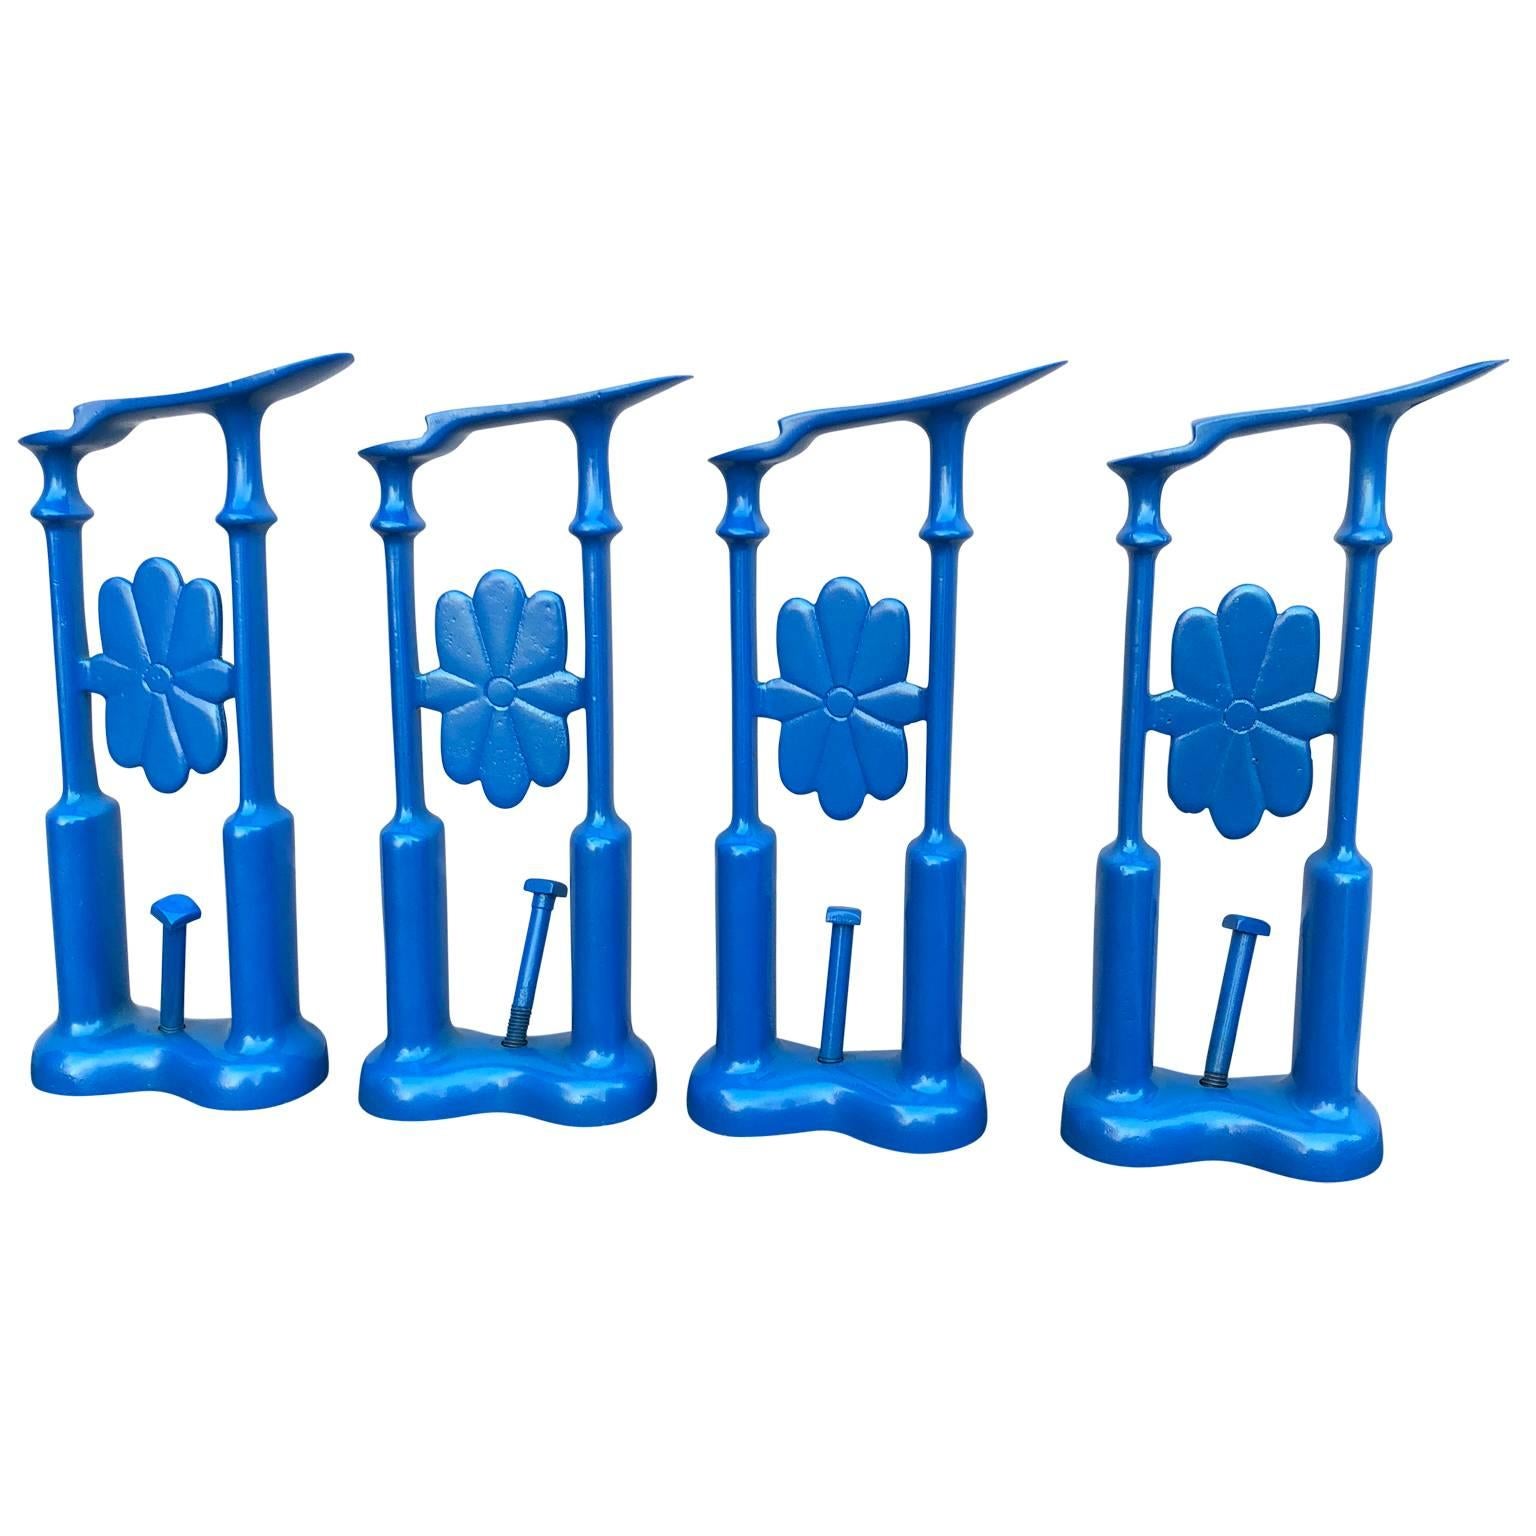 Set of 4 Decorative Blue Powder-Coated Cast Iron Shoe-shine Stands